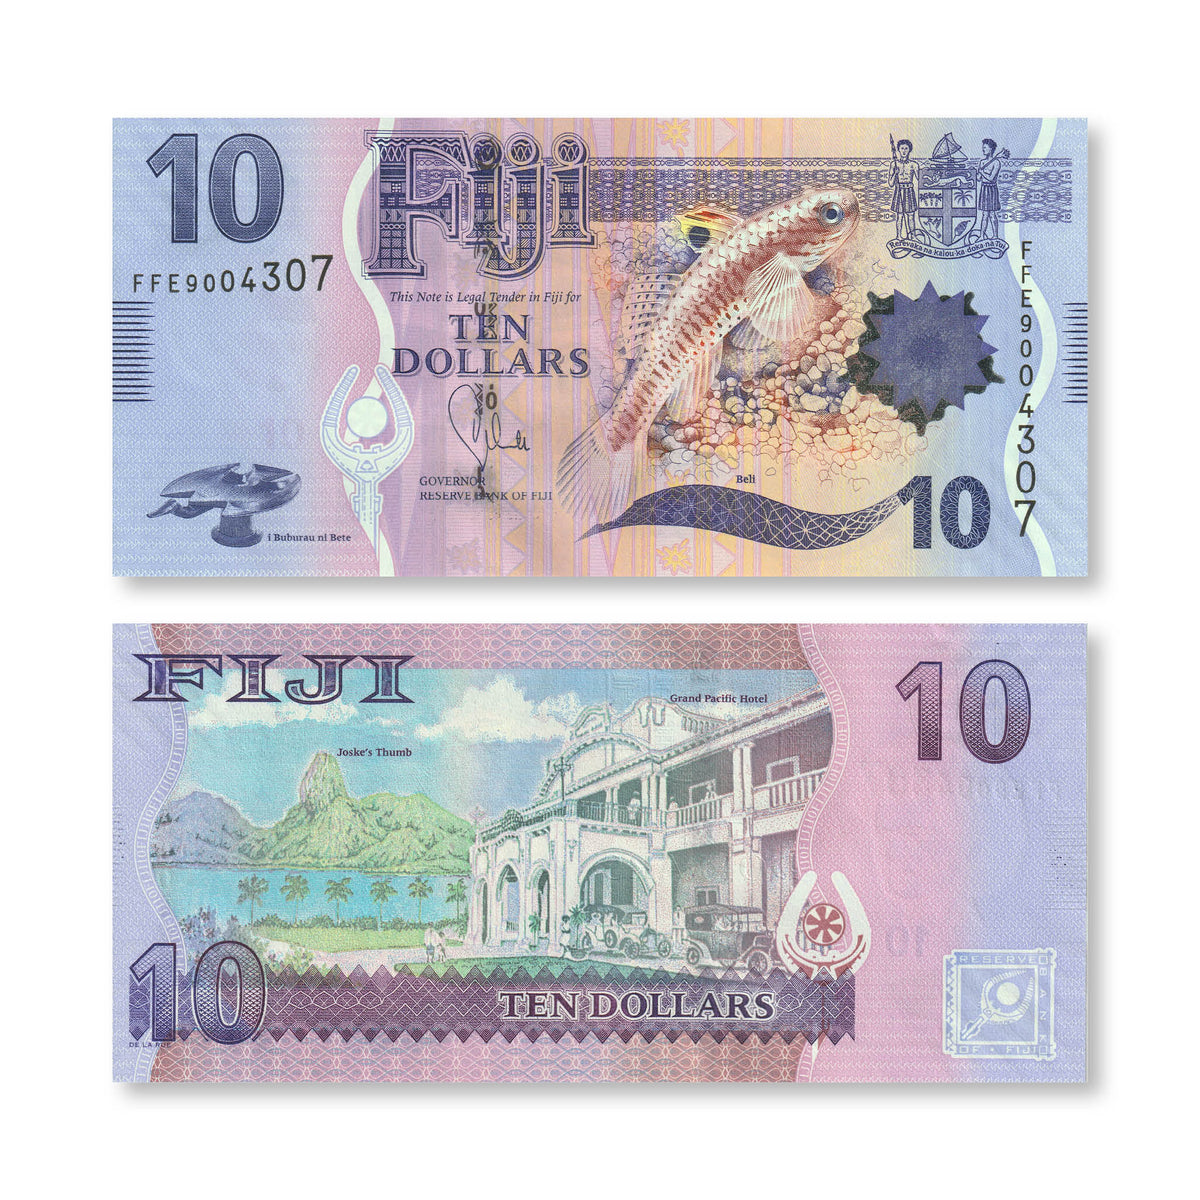 Fiji 10 Dollars, 2013, B527a, P116a, UNC - Robert's World Money - World Banknotes